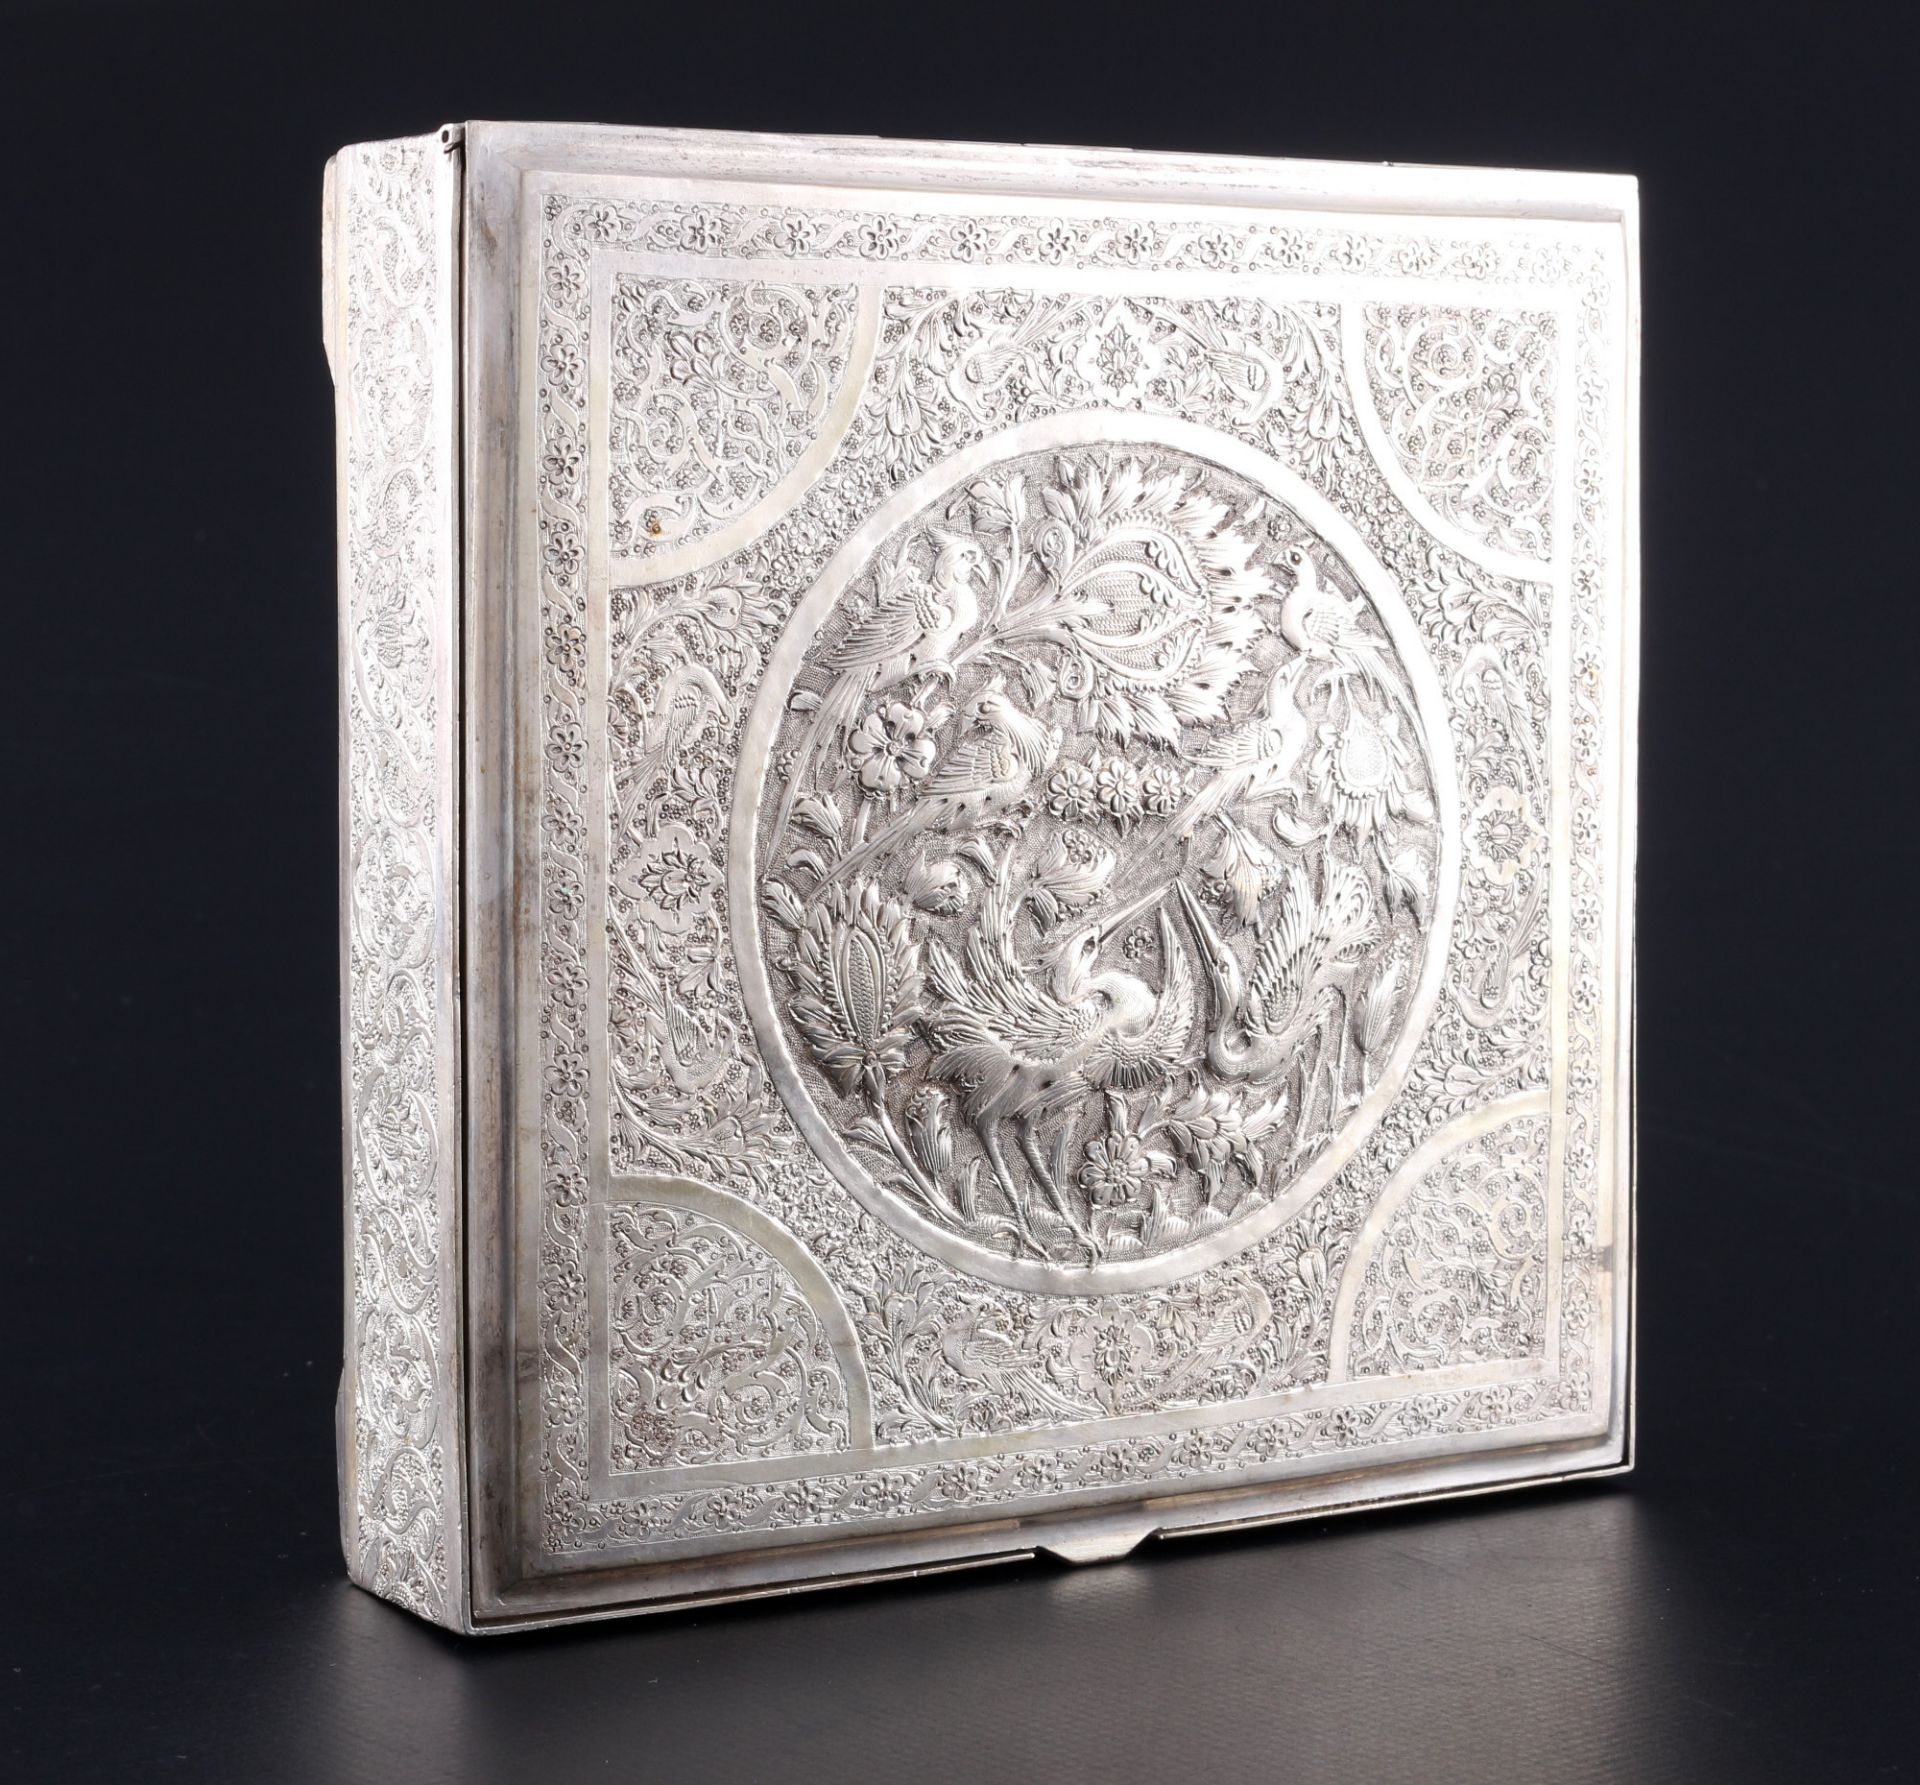 Silver persian lidded box, Silber persische Deckeldose, - Image 4 of 4